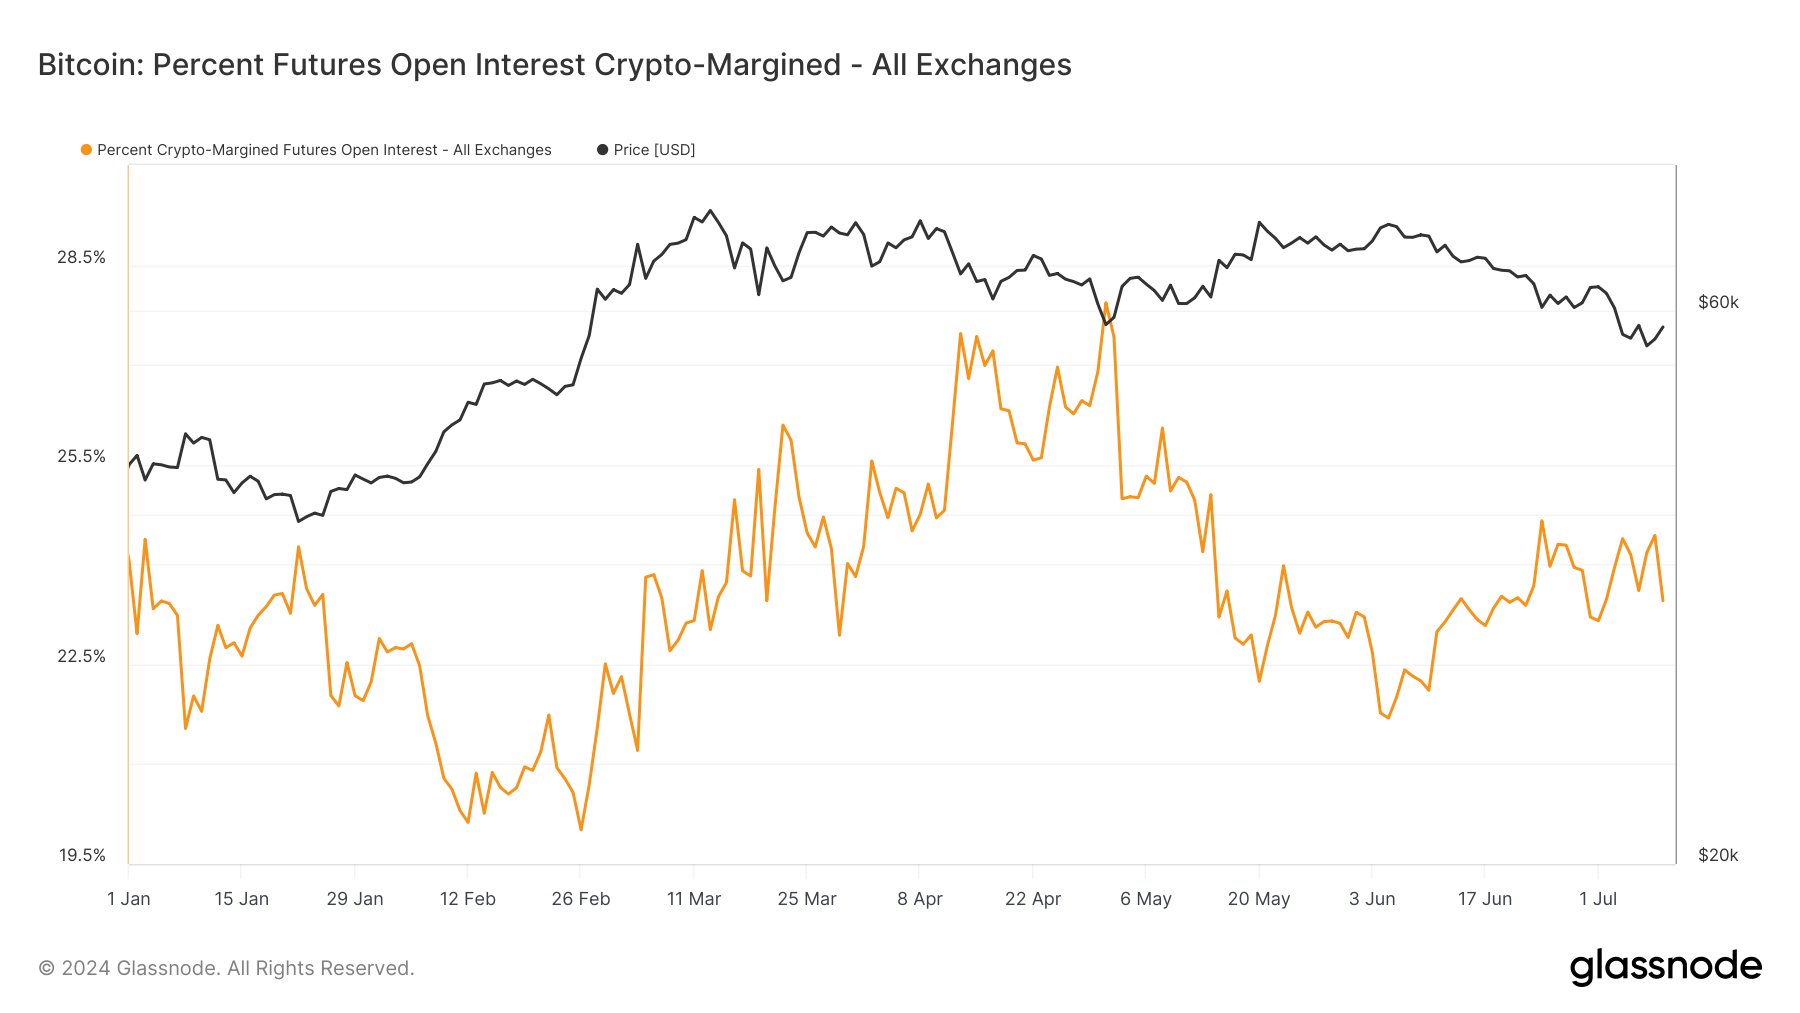 Bitcoin: Percent Futures Open Interest Crypto-Margined: (Source: Glassnode)